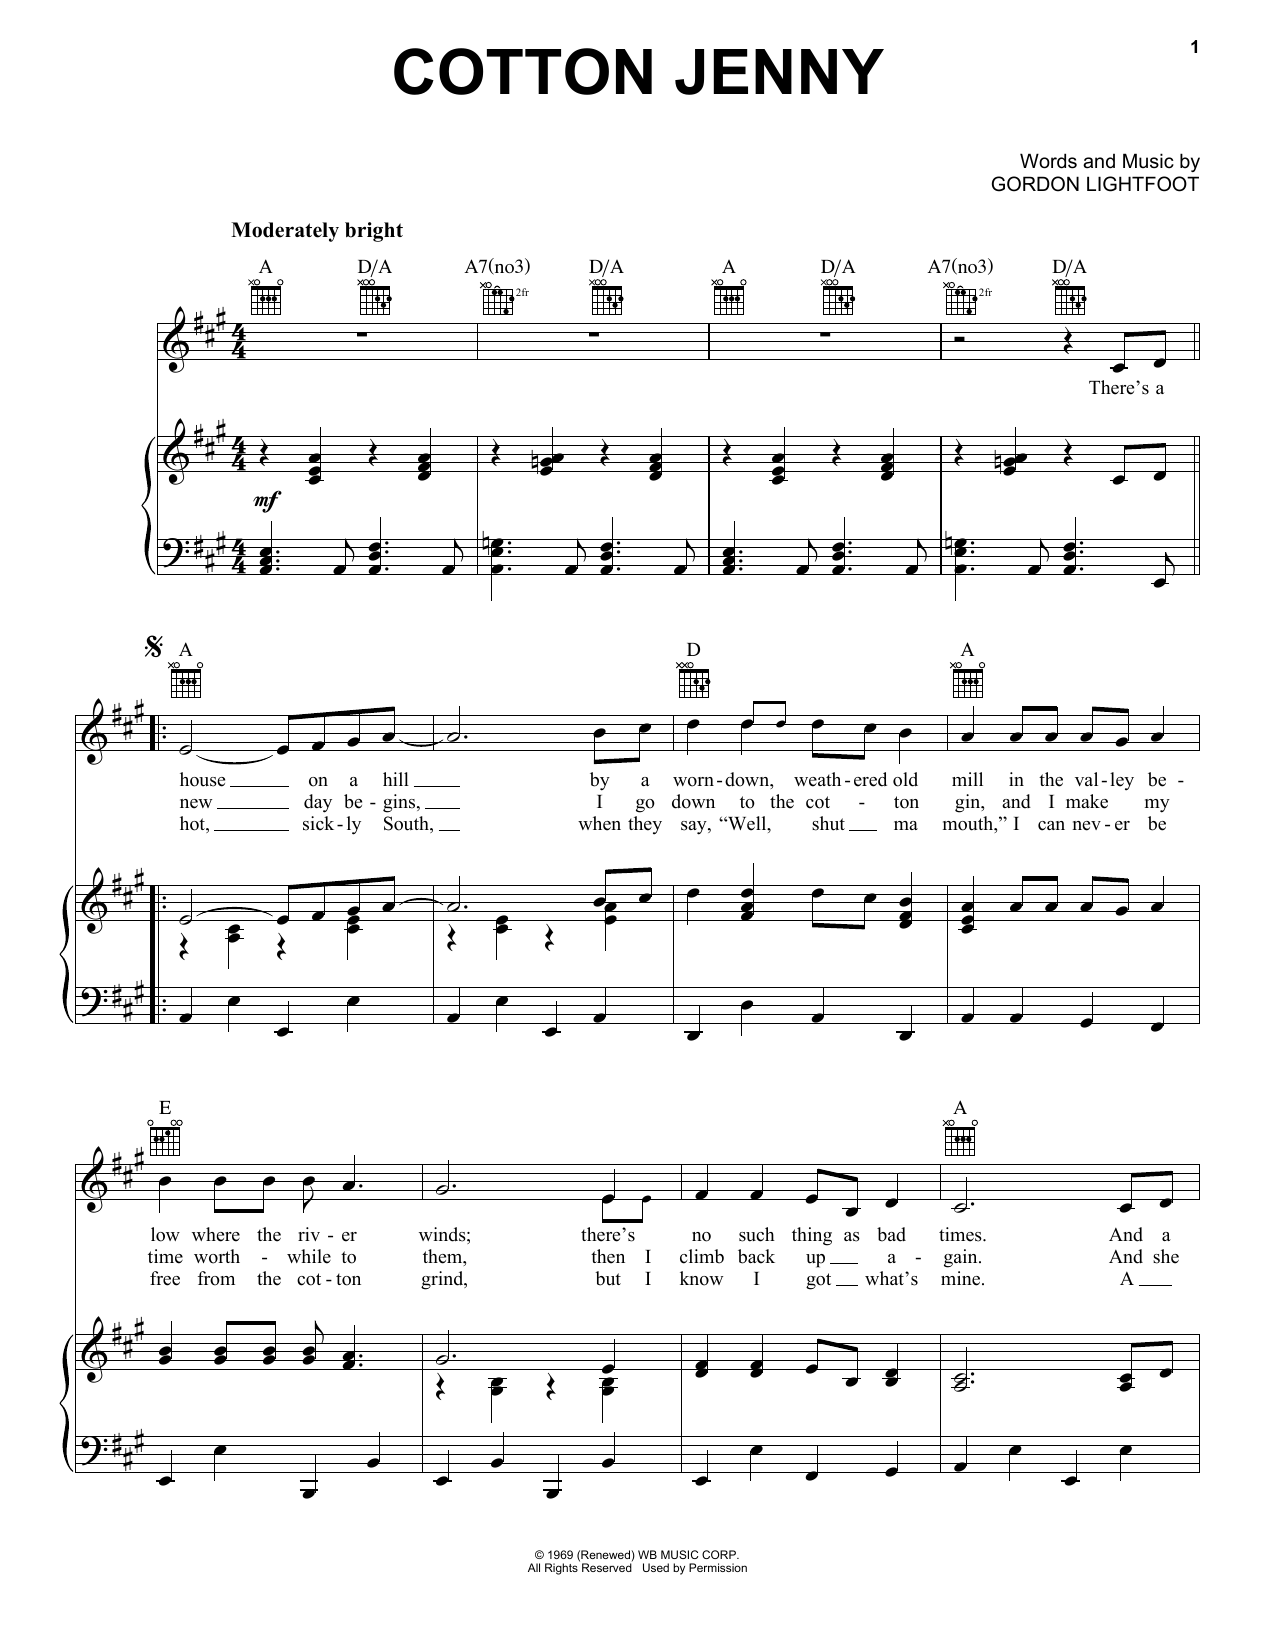 Gordon Lightfoot Cotton Jenny Sheet Music Notes & Chords for Lyrics & Chords - Download or Print PDF